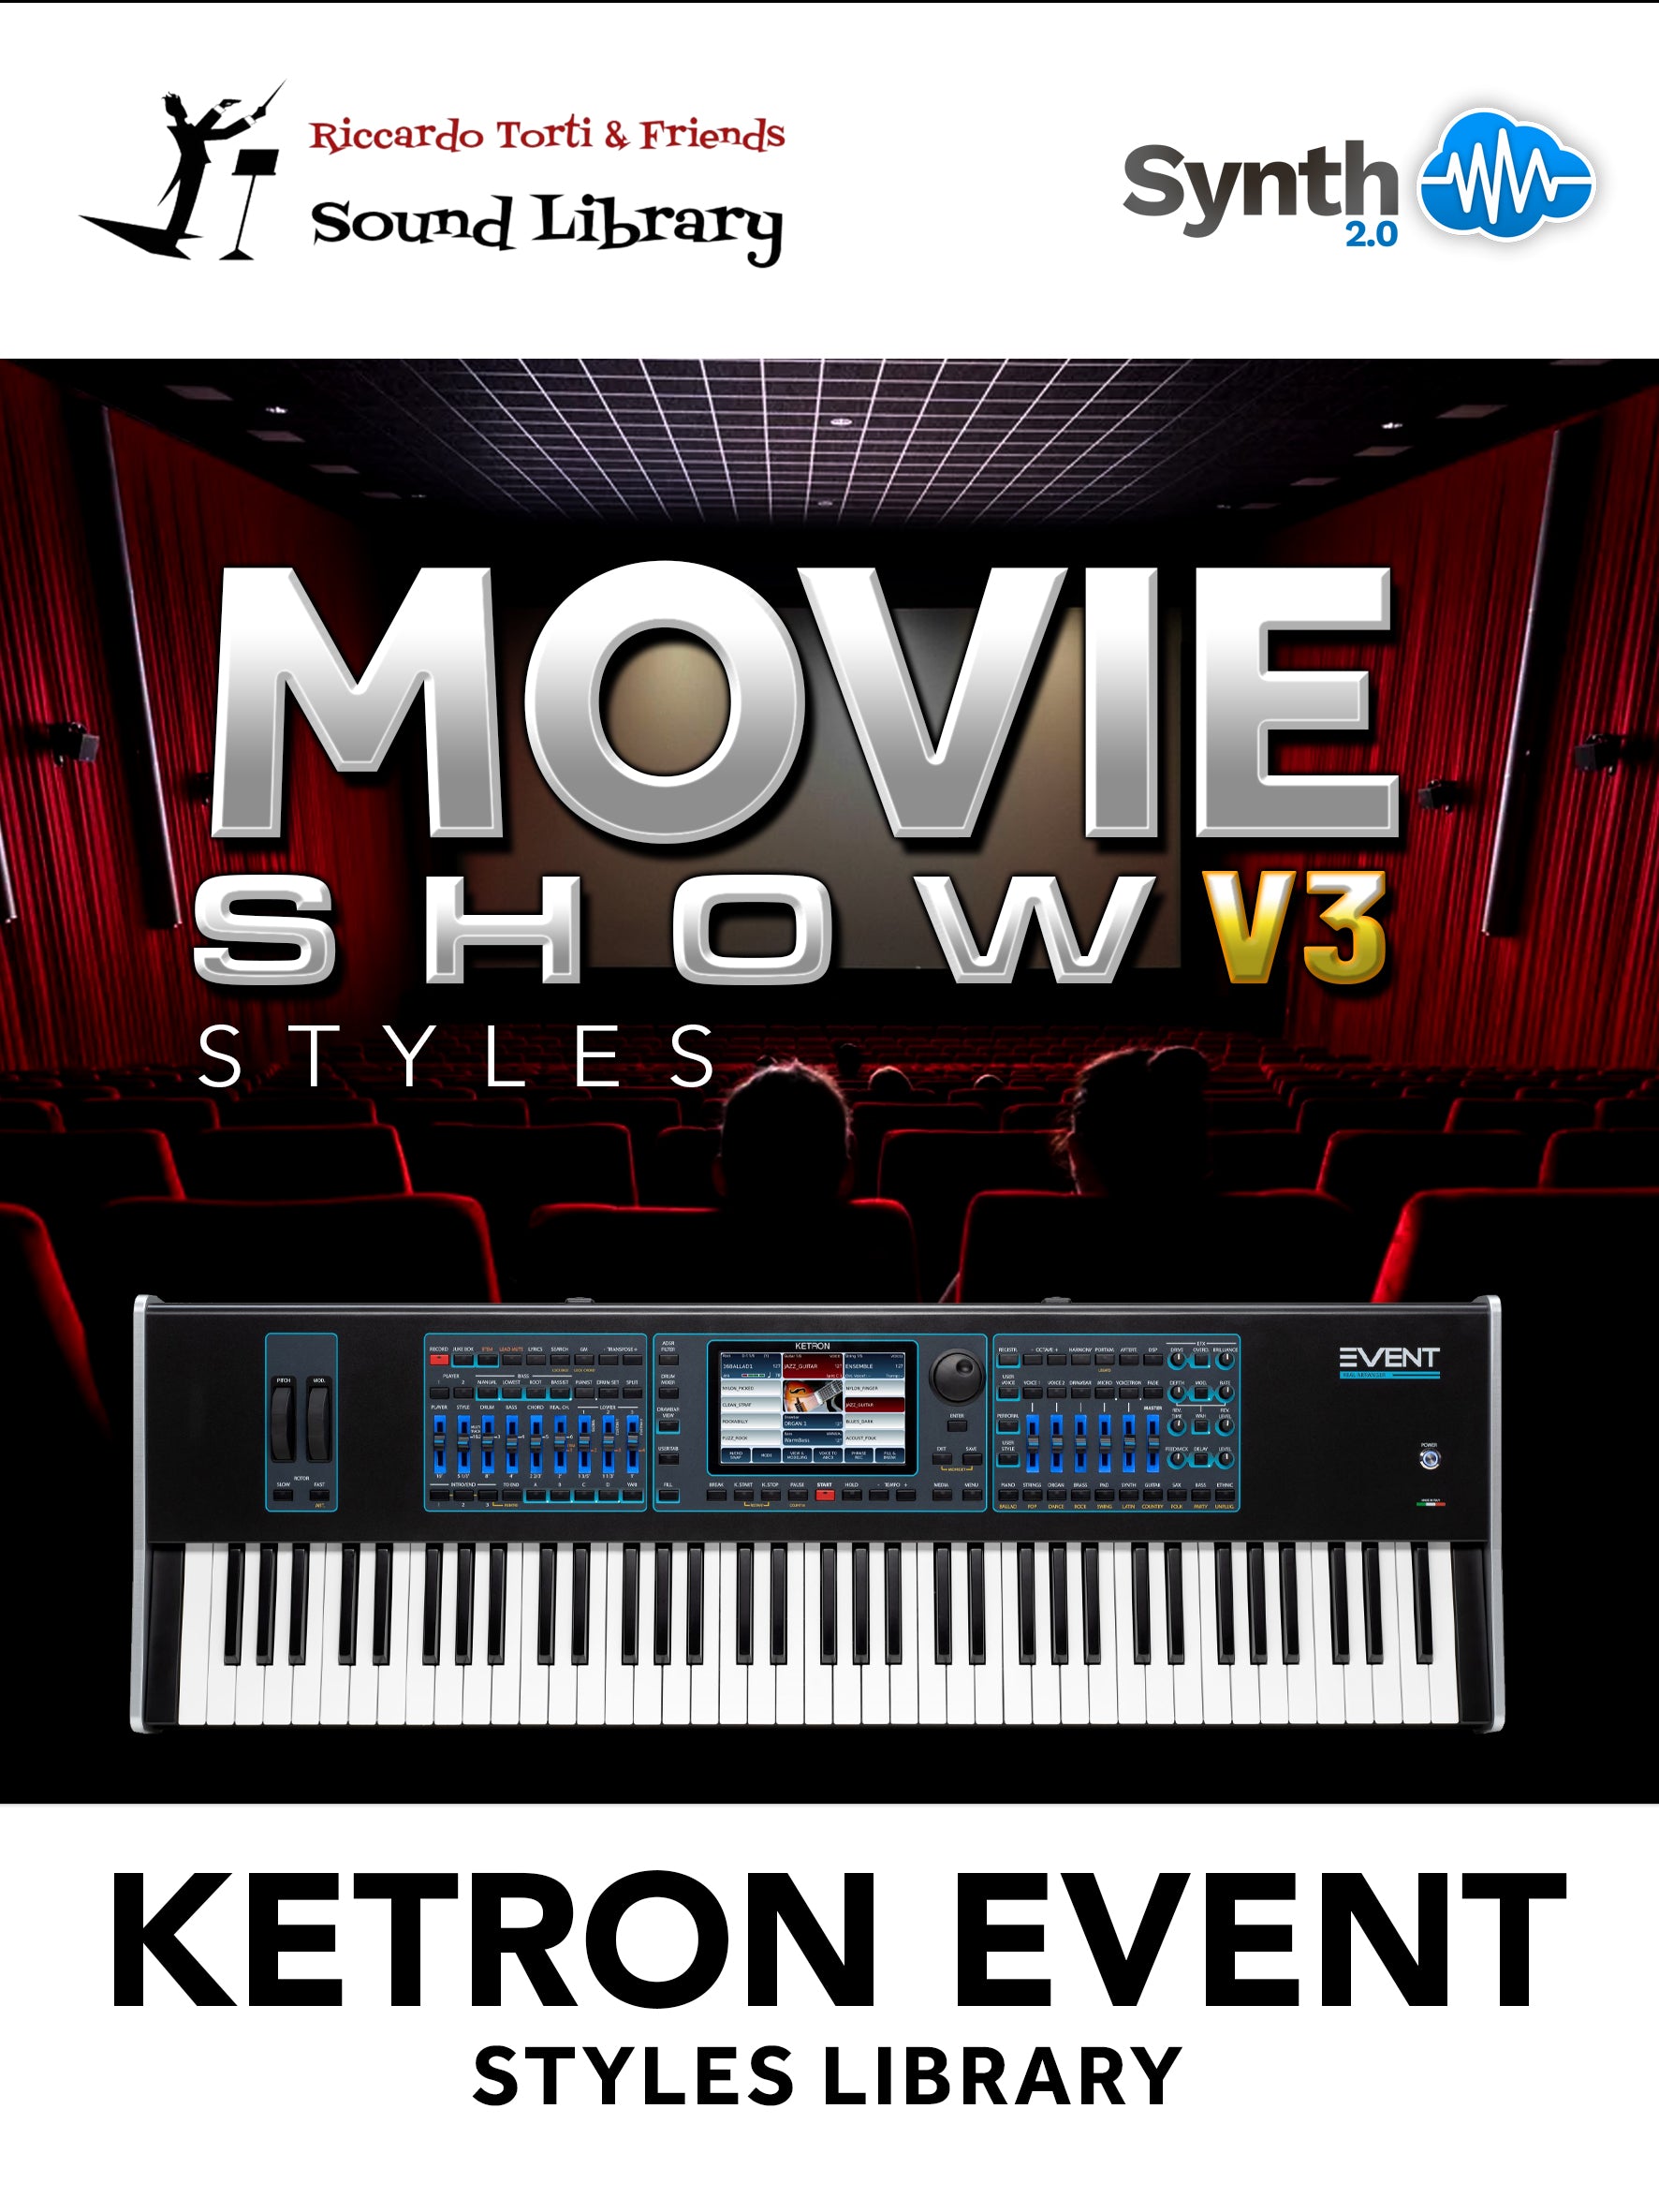 EVS003 - Movie Show V3 - Ketron Event ( 8 new styles )